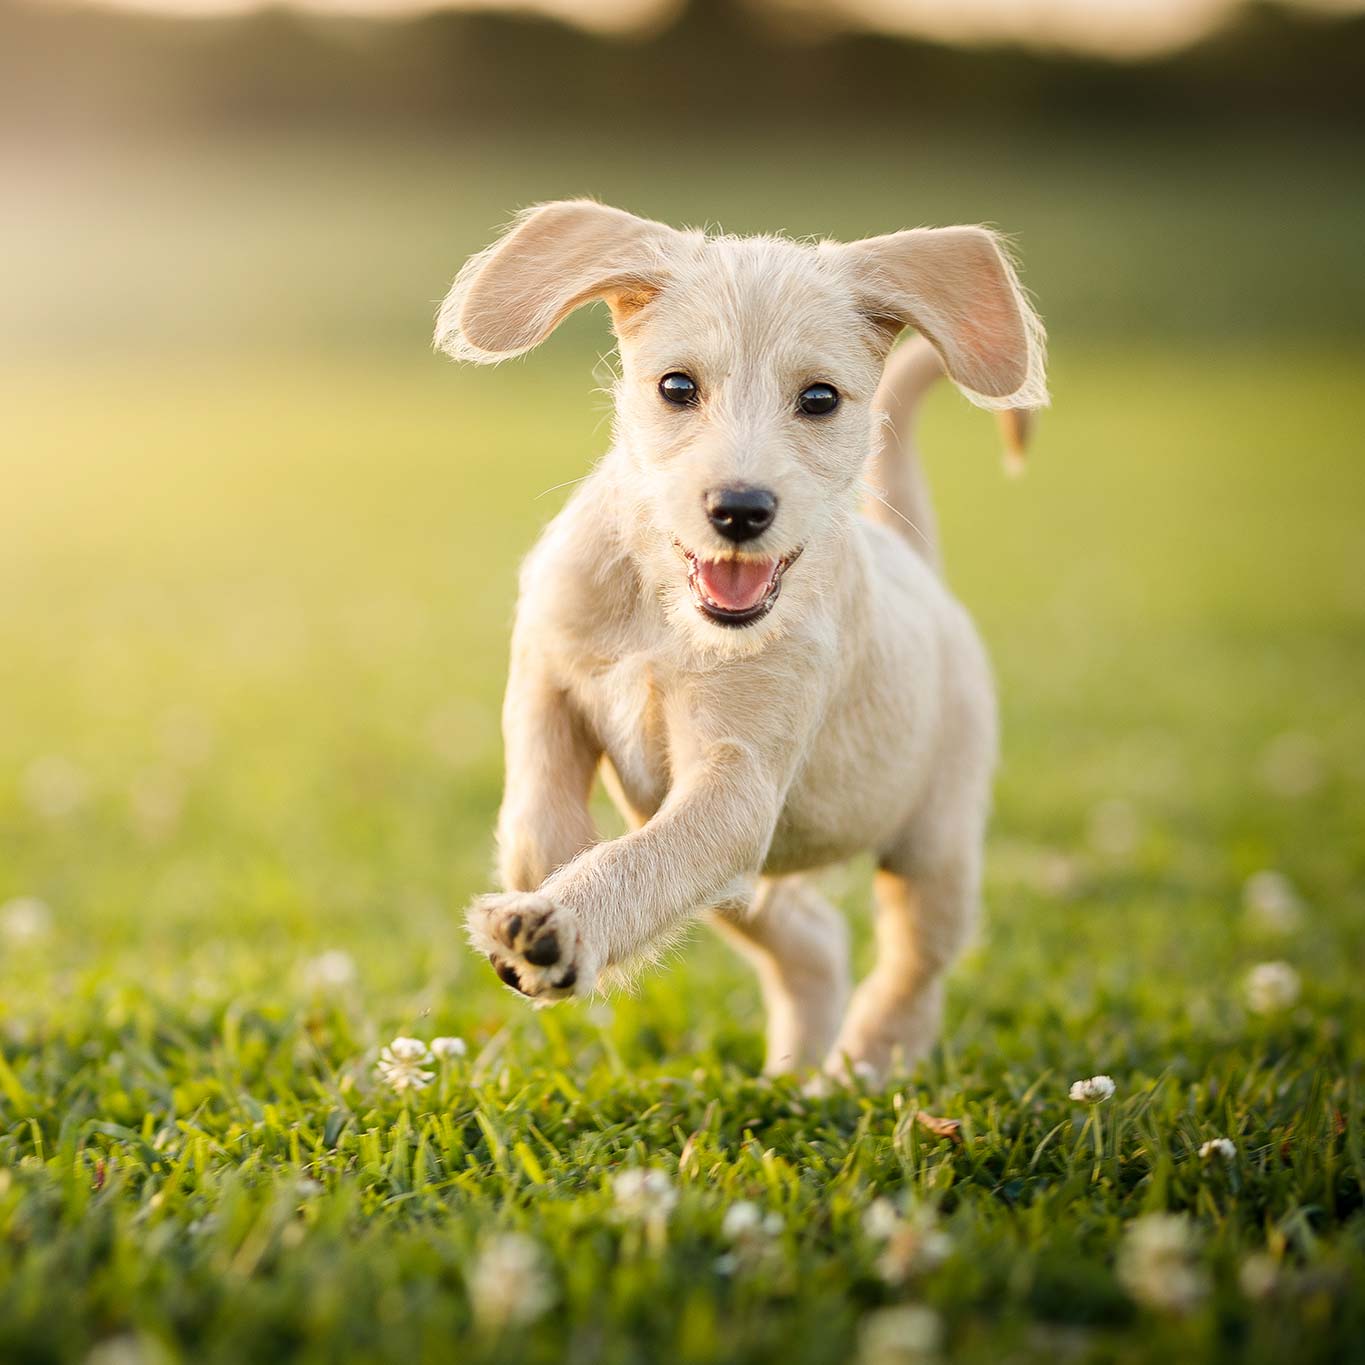 A puppy running in a green field